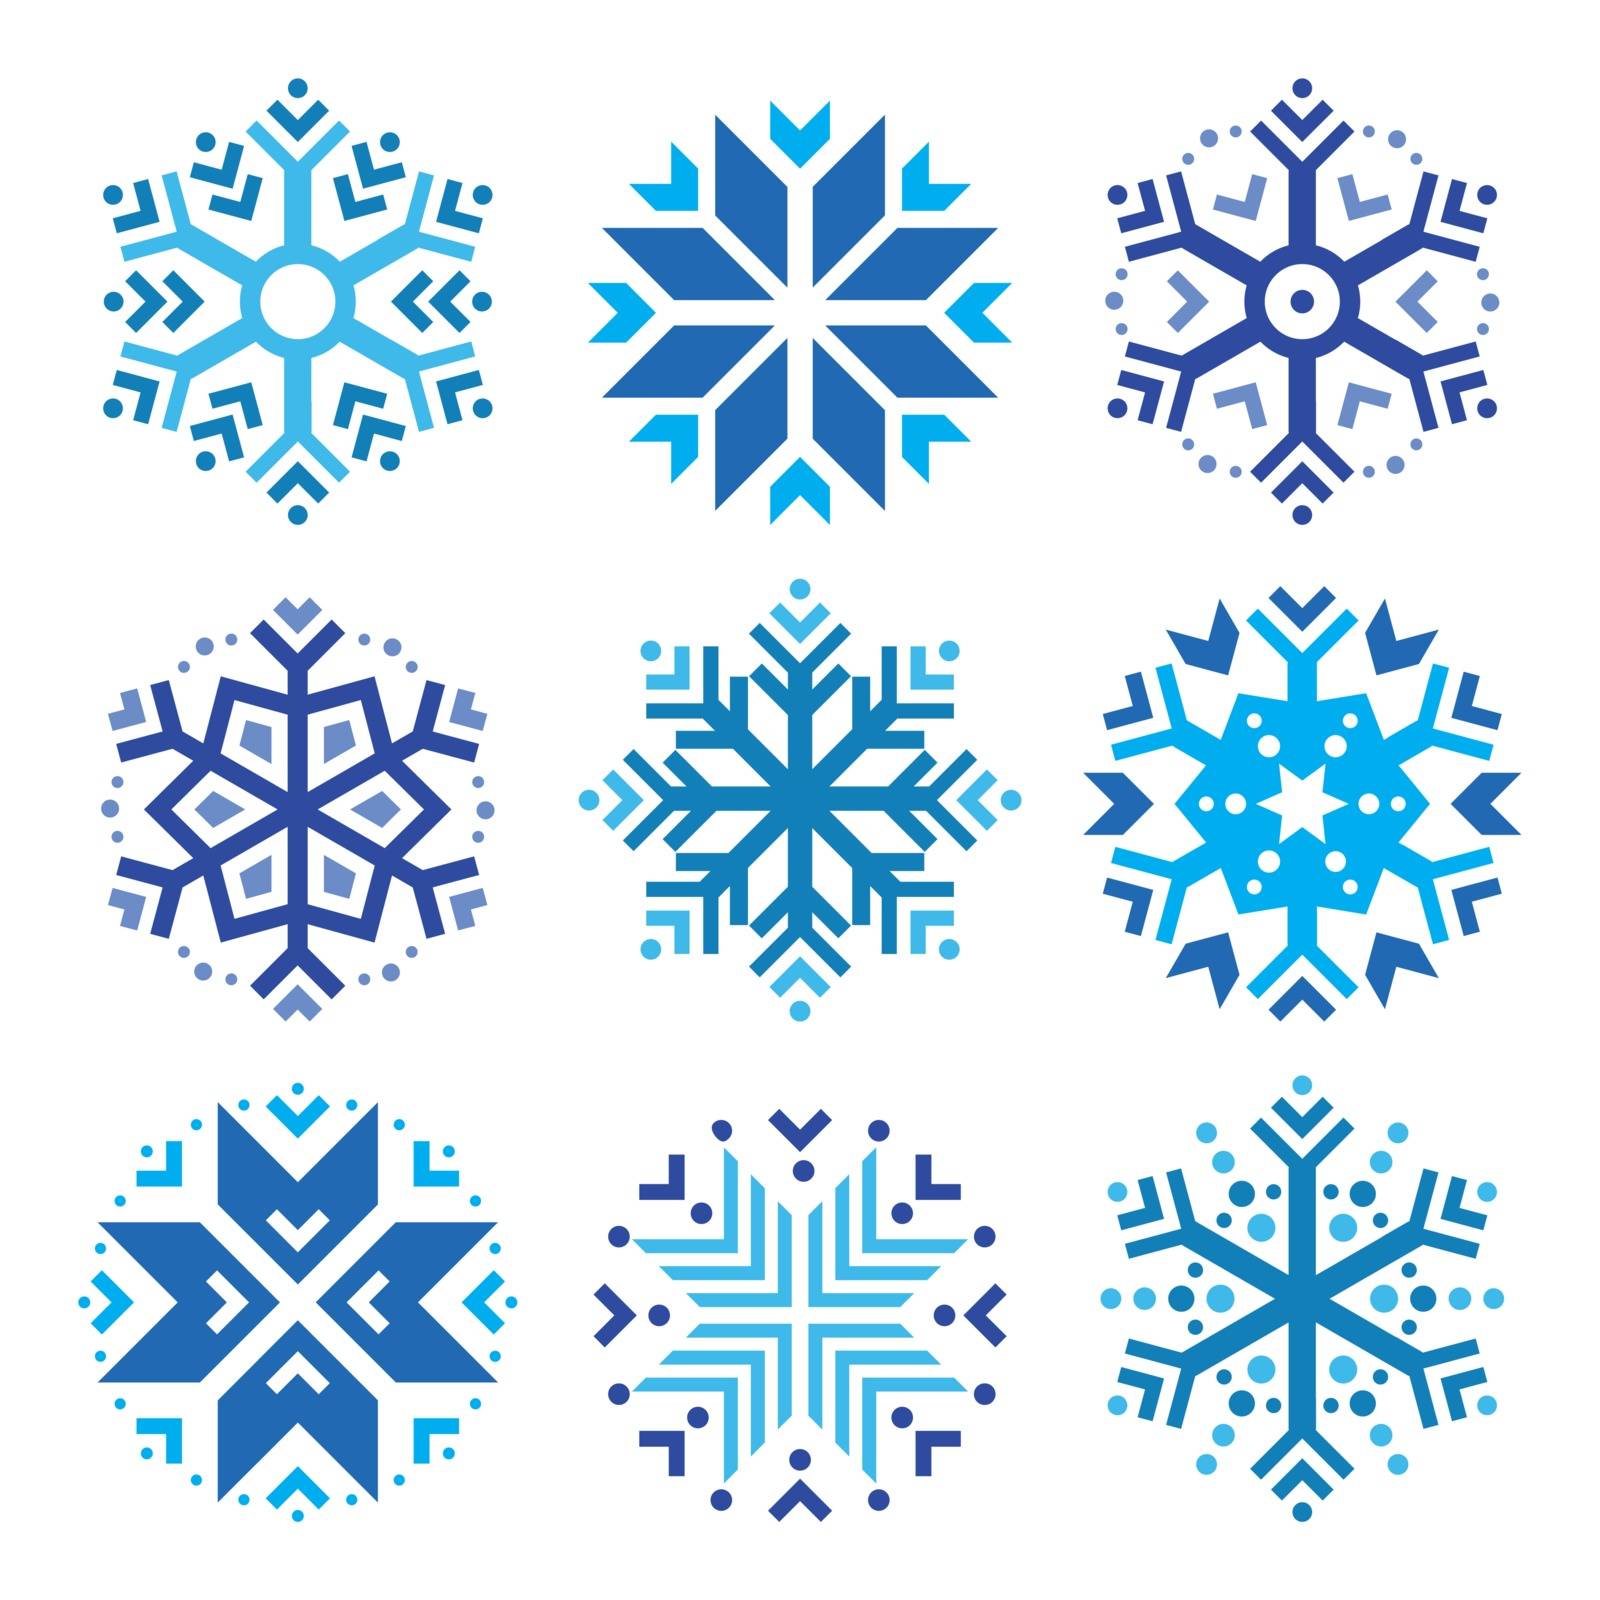 Winter Christmas icons set- snowflakes isolated on white